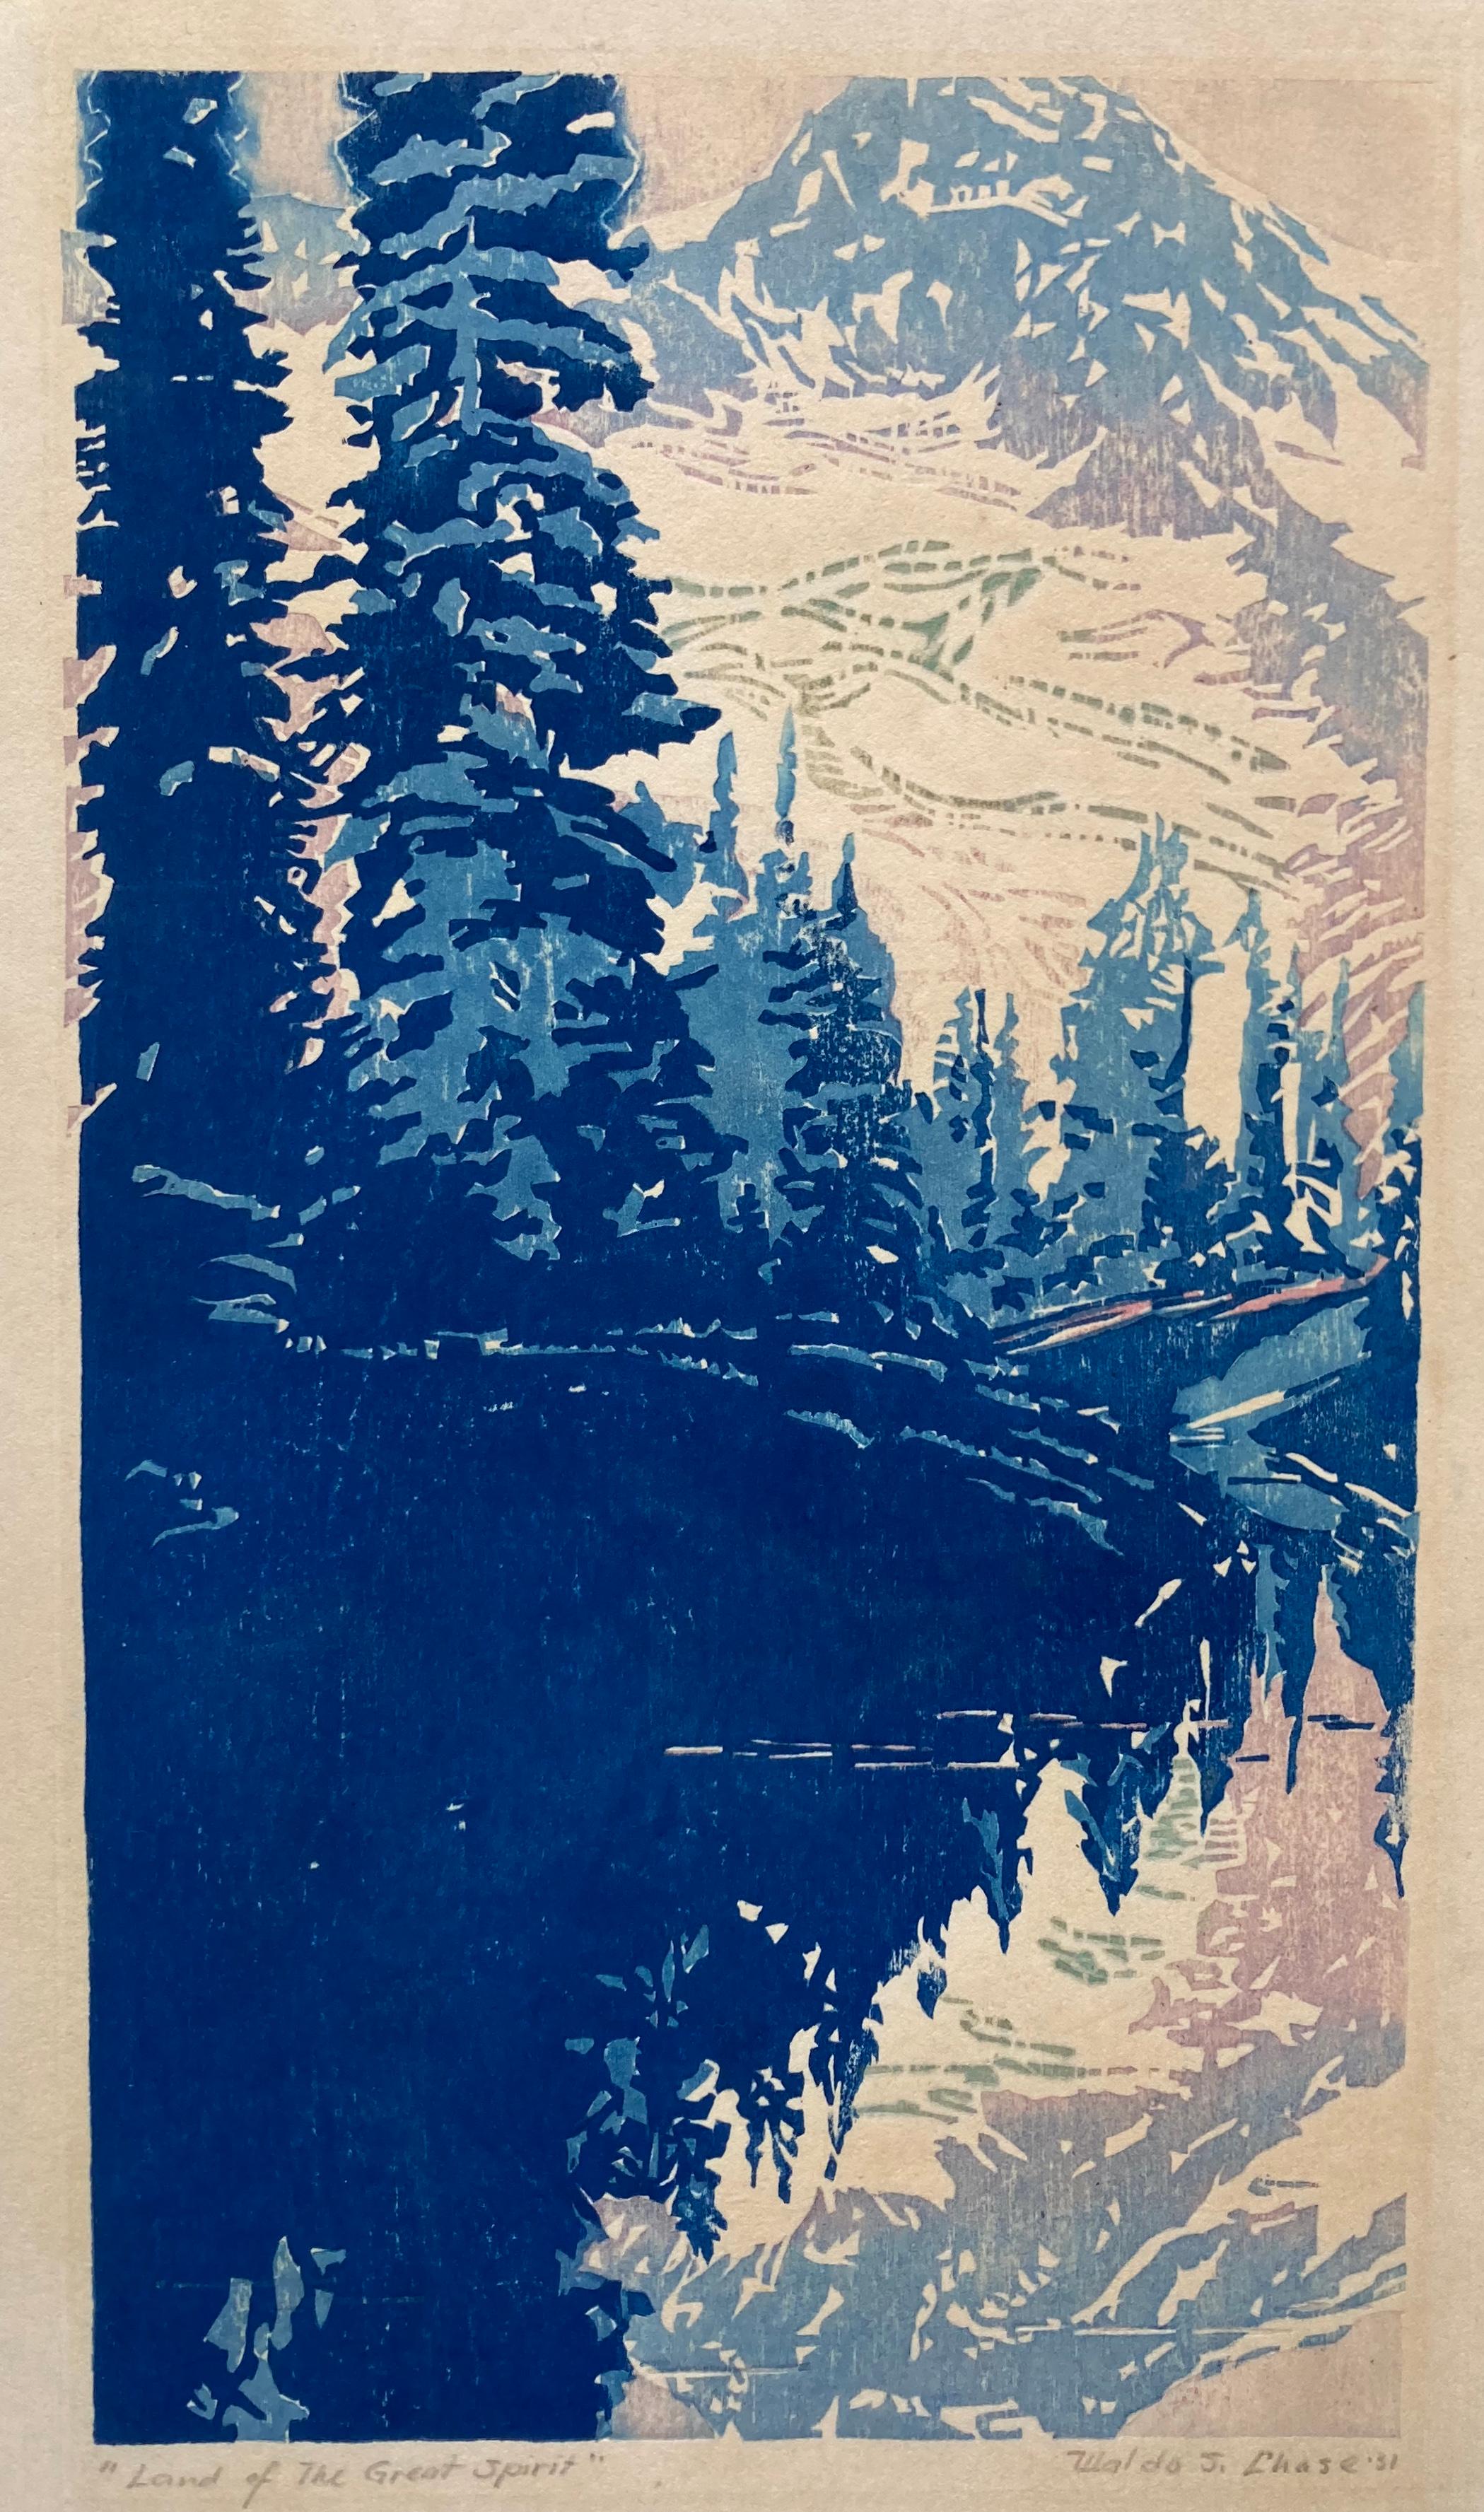 Waldo S. Chase Landscape Print - LAND OF THE GREAT SPIRIT